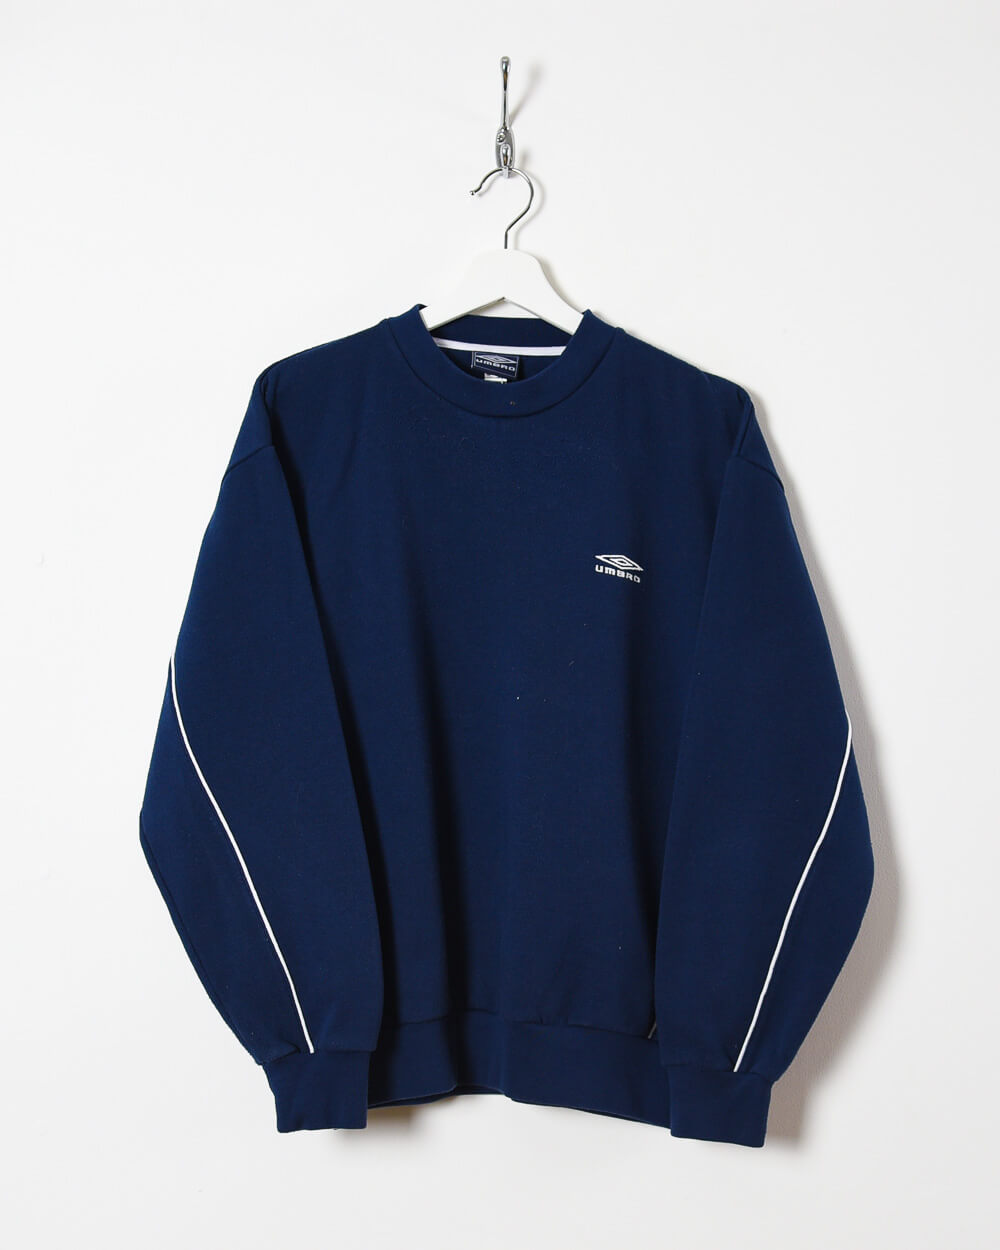 Umbro Sweatshirt - Medium - Domno Vintage 90s, 80s, 00s Retro and Vintage Clothing 